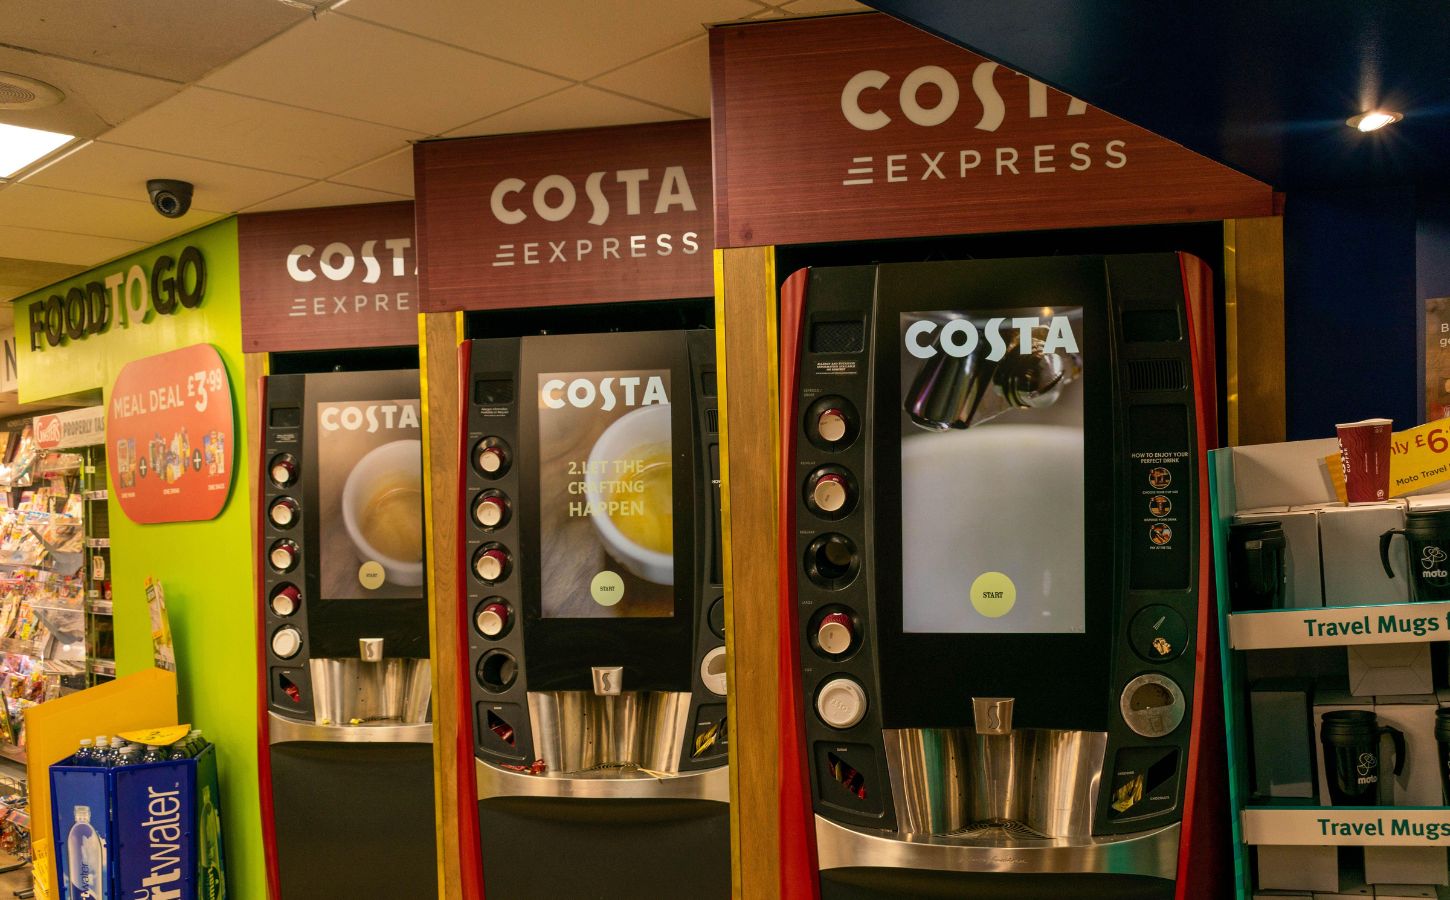 Costa Coffee Express machines